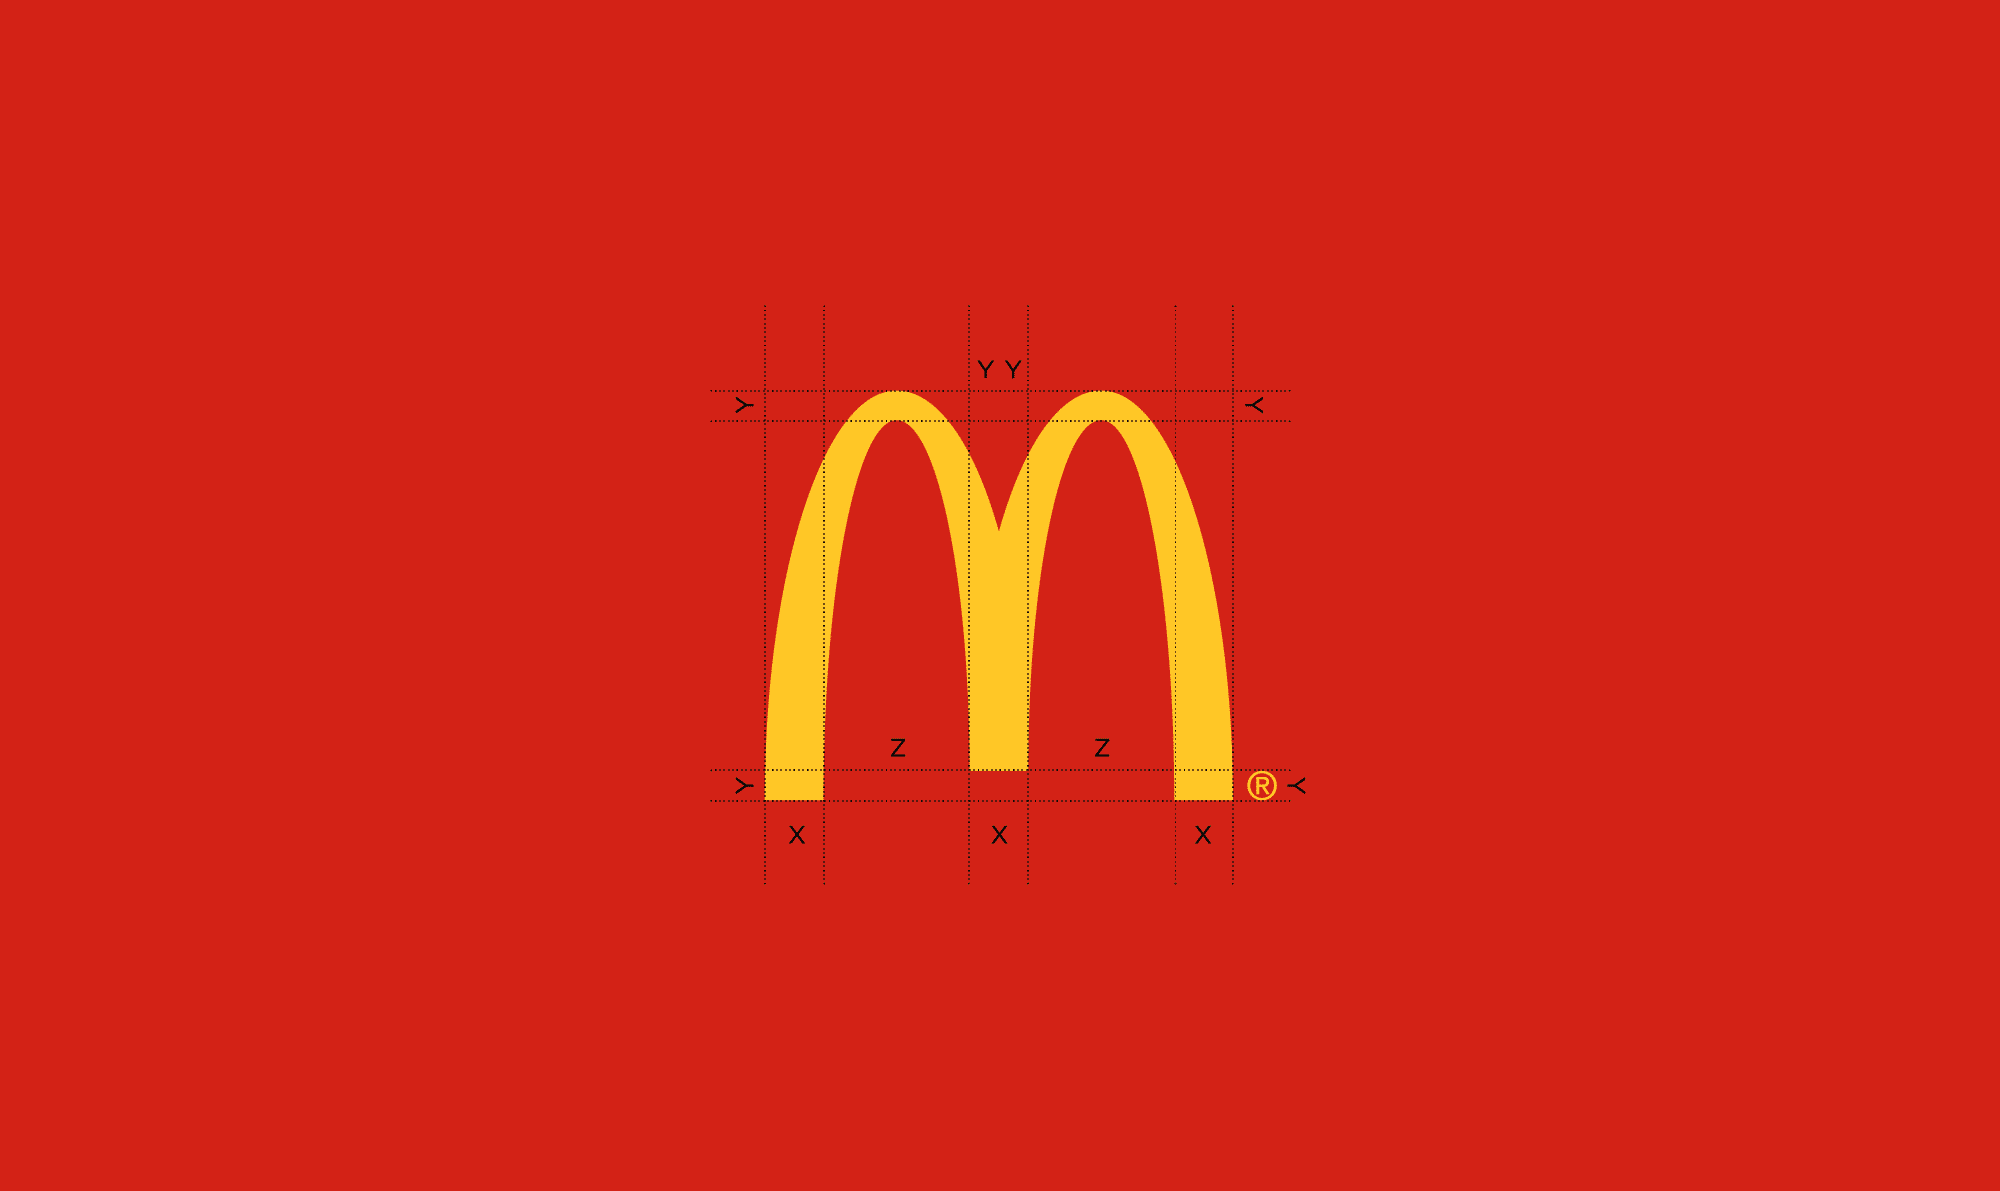 What makes McDonald’s logo design so successful?